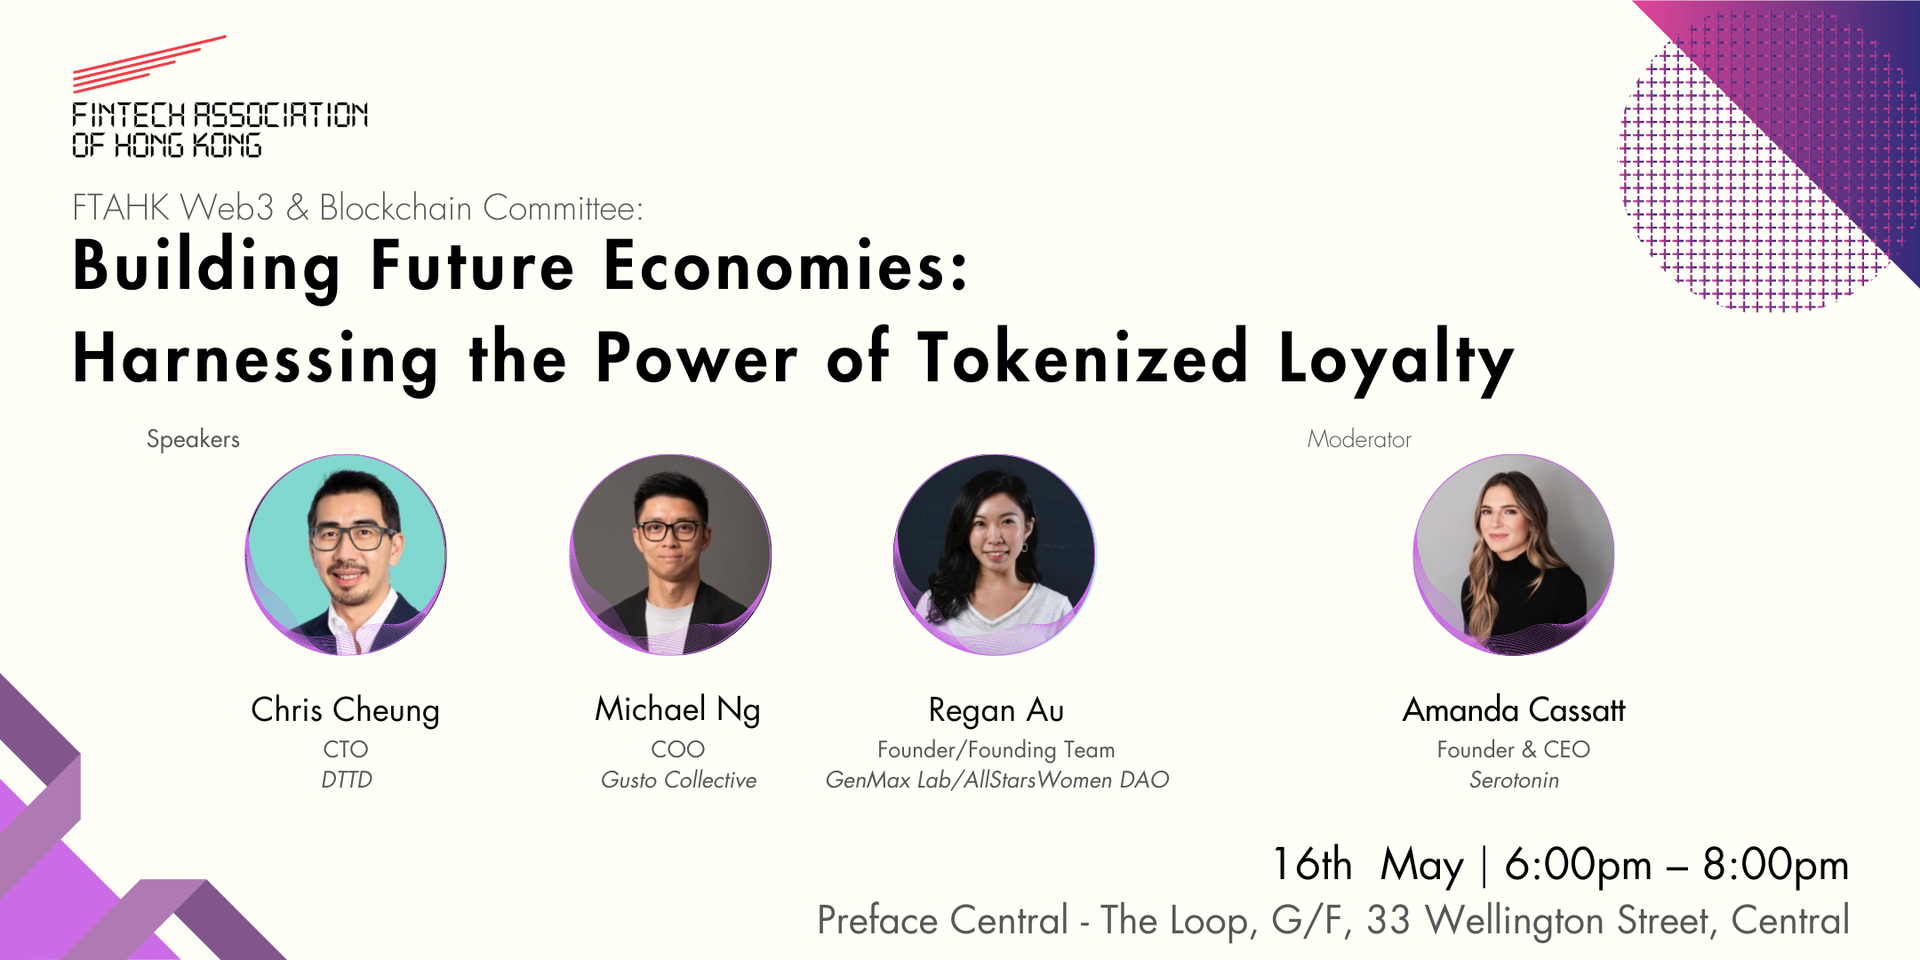 thumbnails FTAHK Web3 & Blockchain: Building Future Economies - Harnessing the Power of Tokenized Loyalty